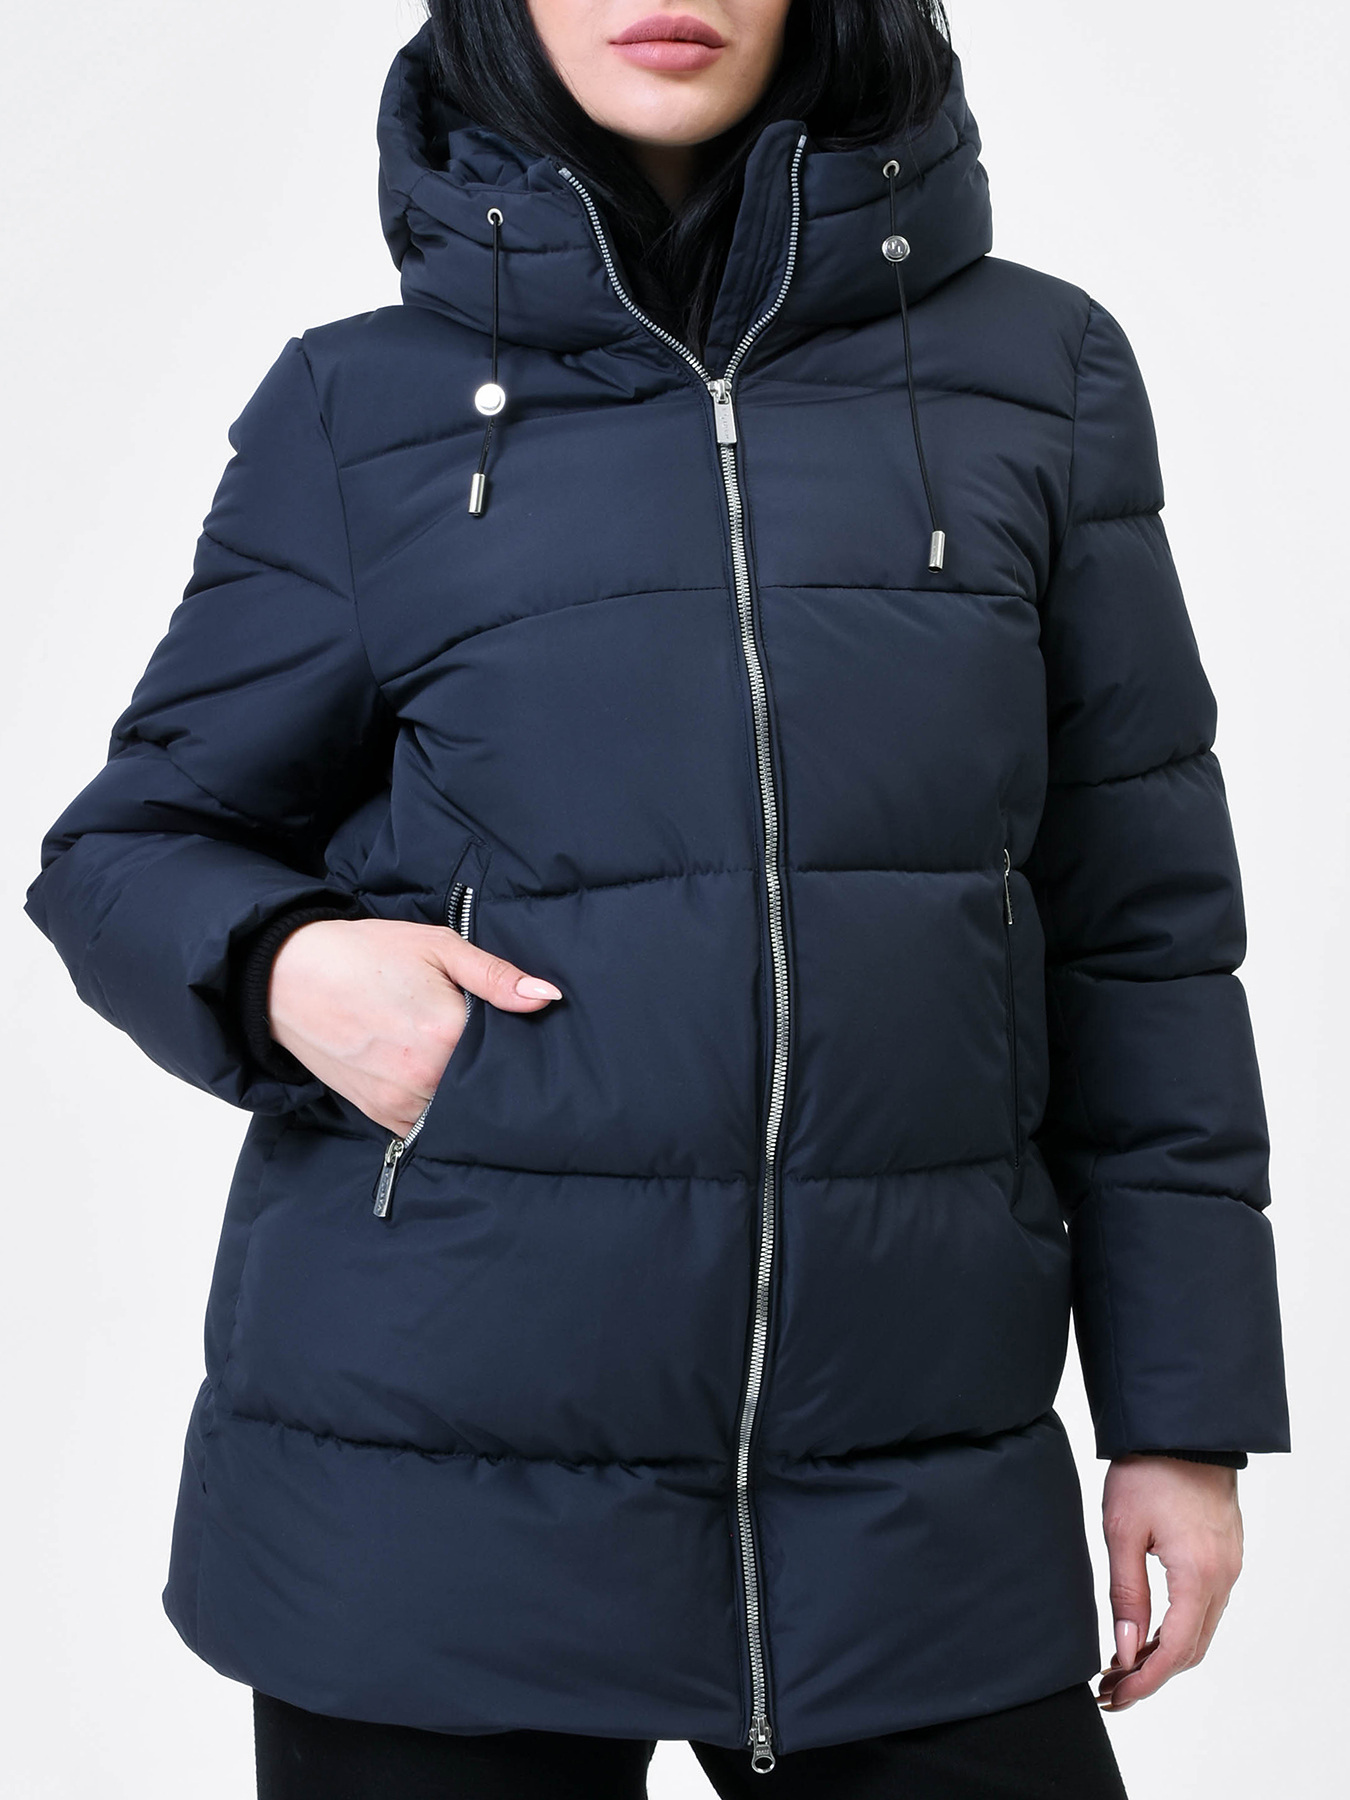 Пальто зимнее Maritta 433612-022, цвет темно-синий, размер 48